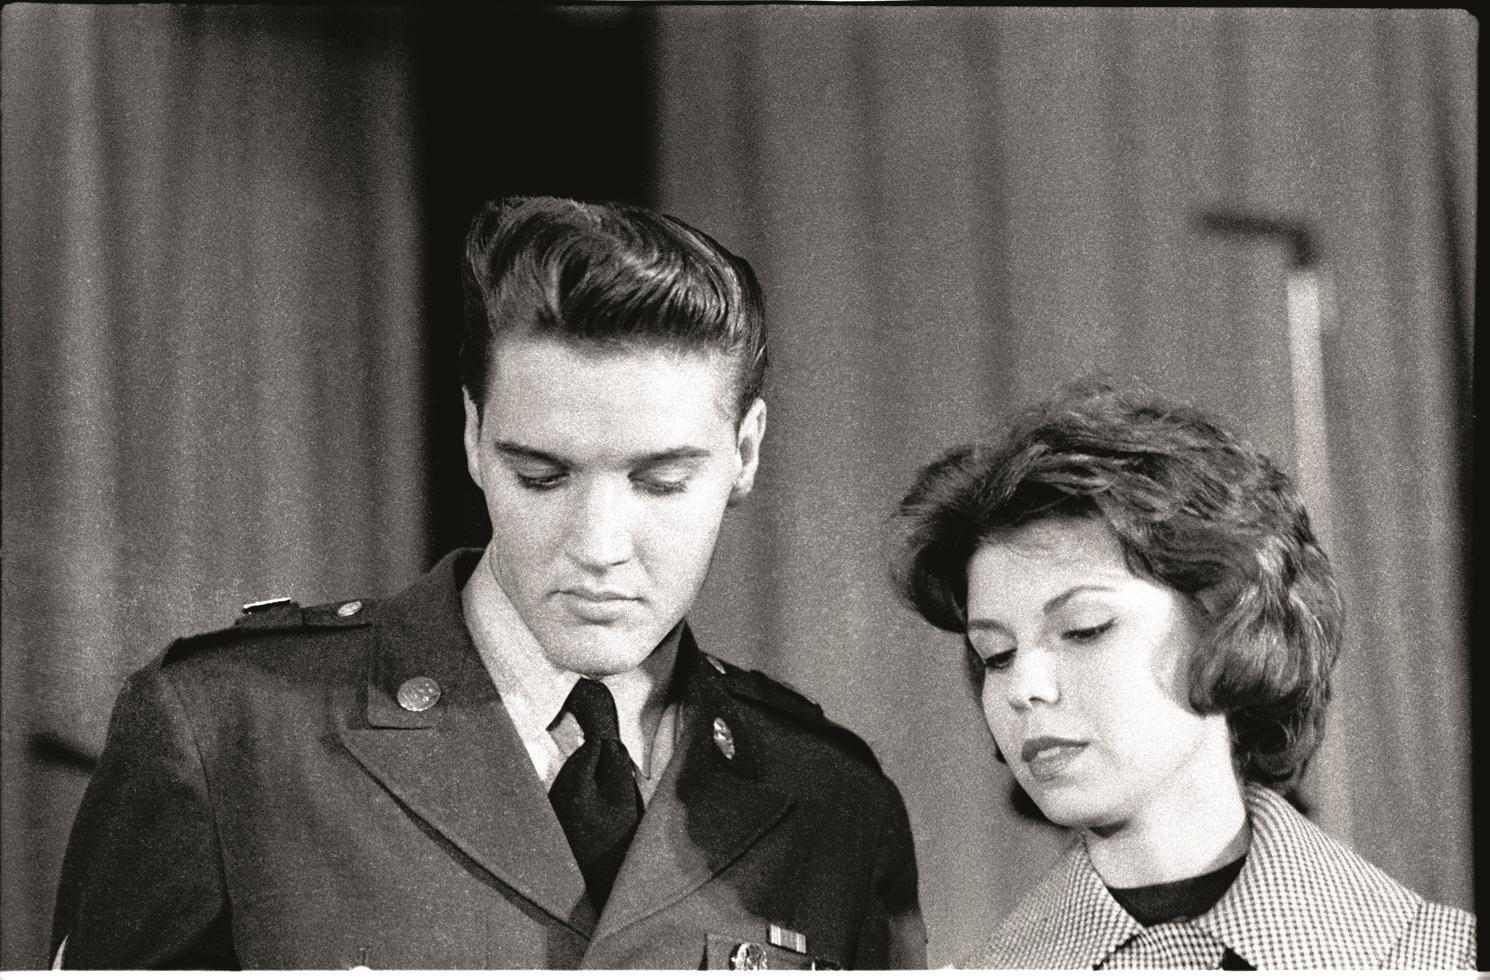 Ken Regan Black and White Photograph - Elvis Presley and Nancy Sinatra, Fort Dix, NJ